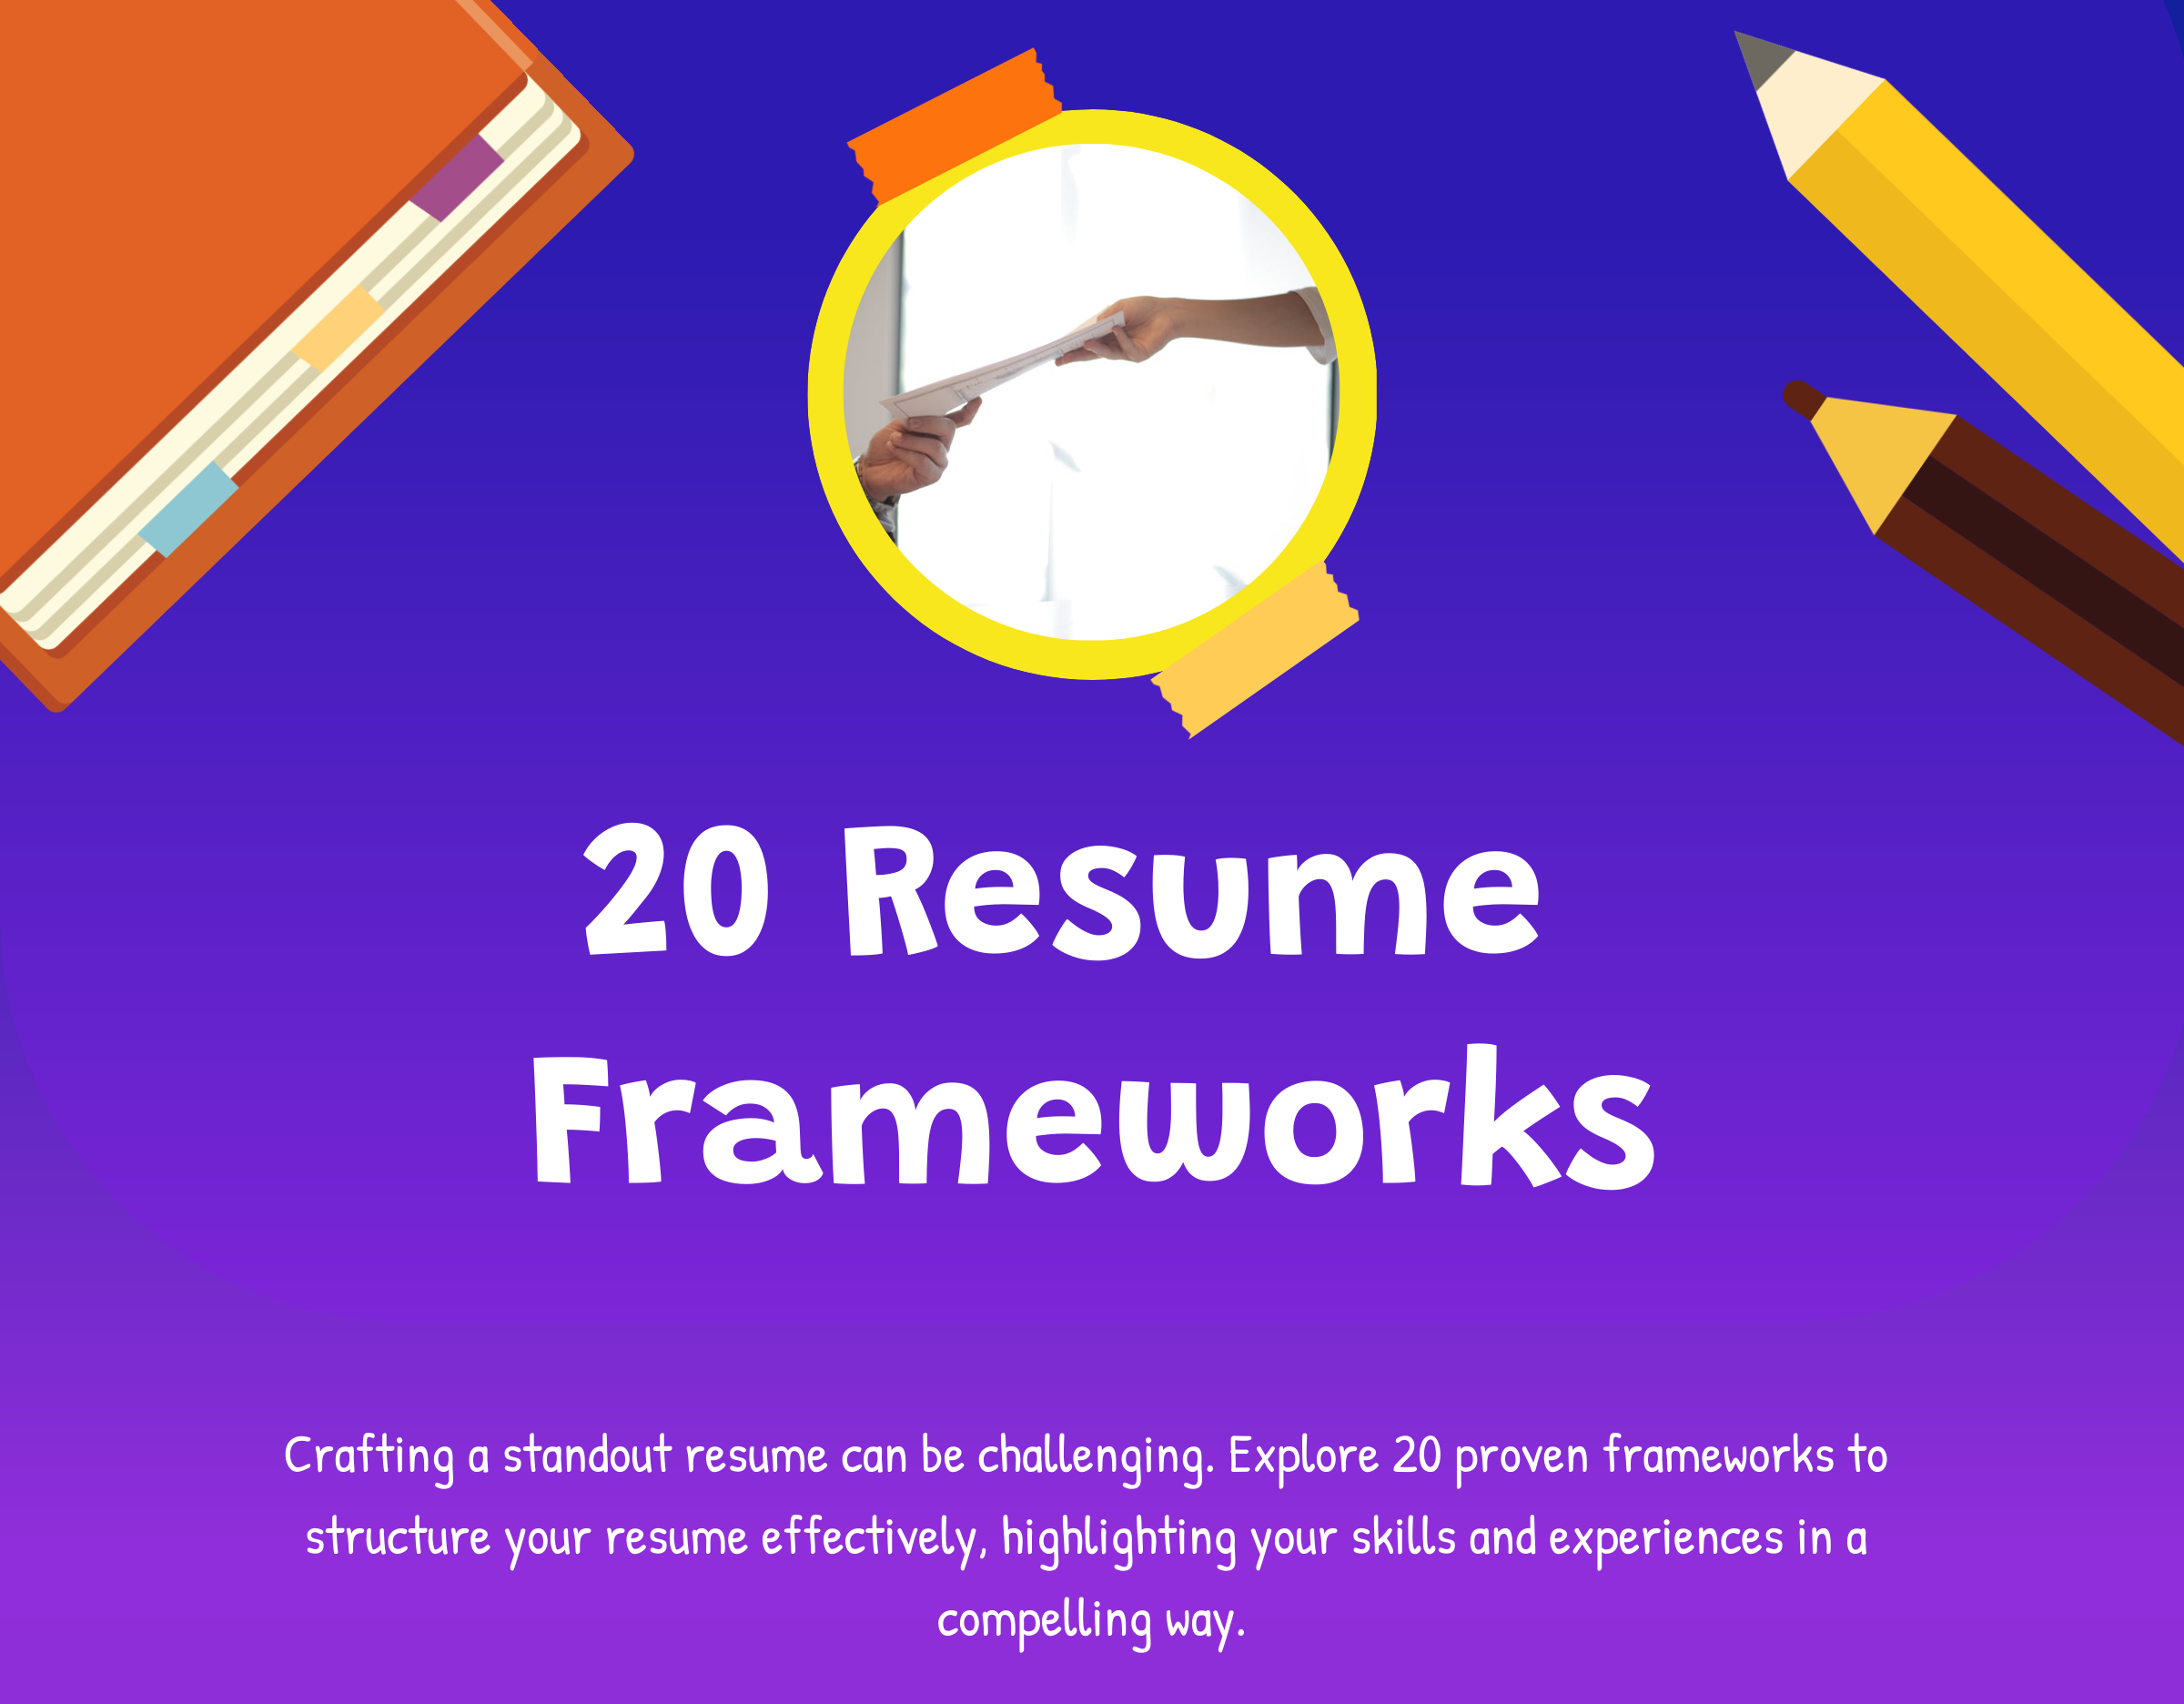 20 Resume Frameworks